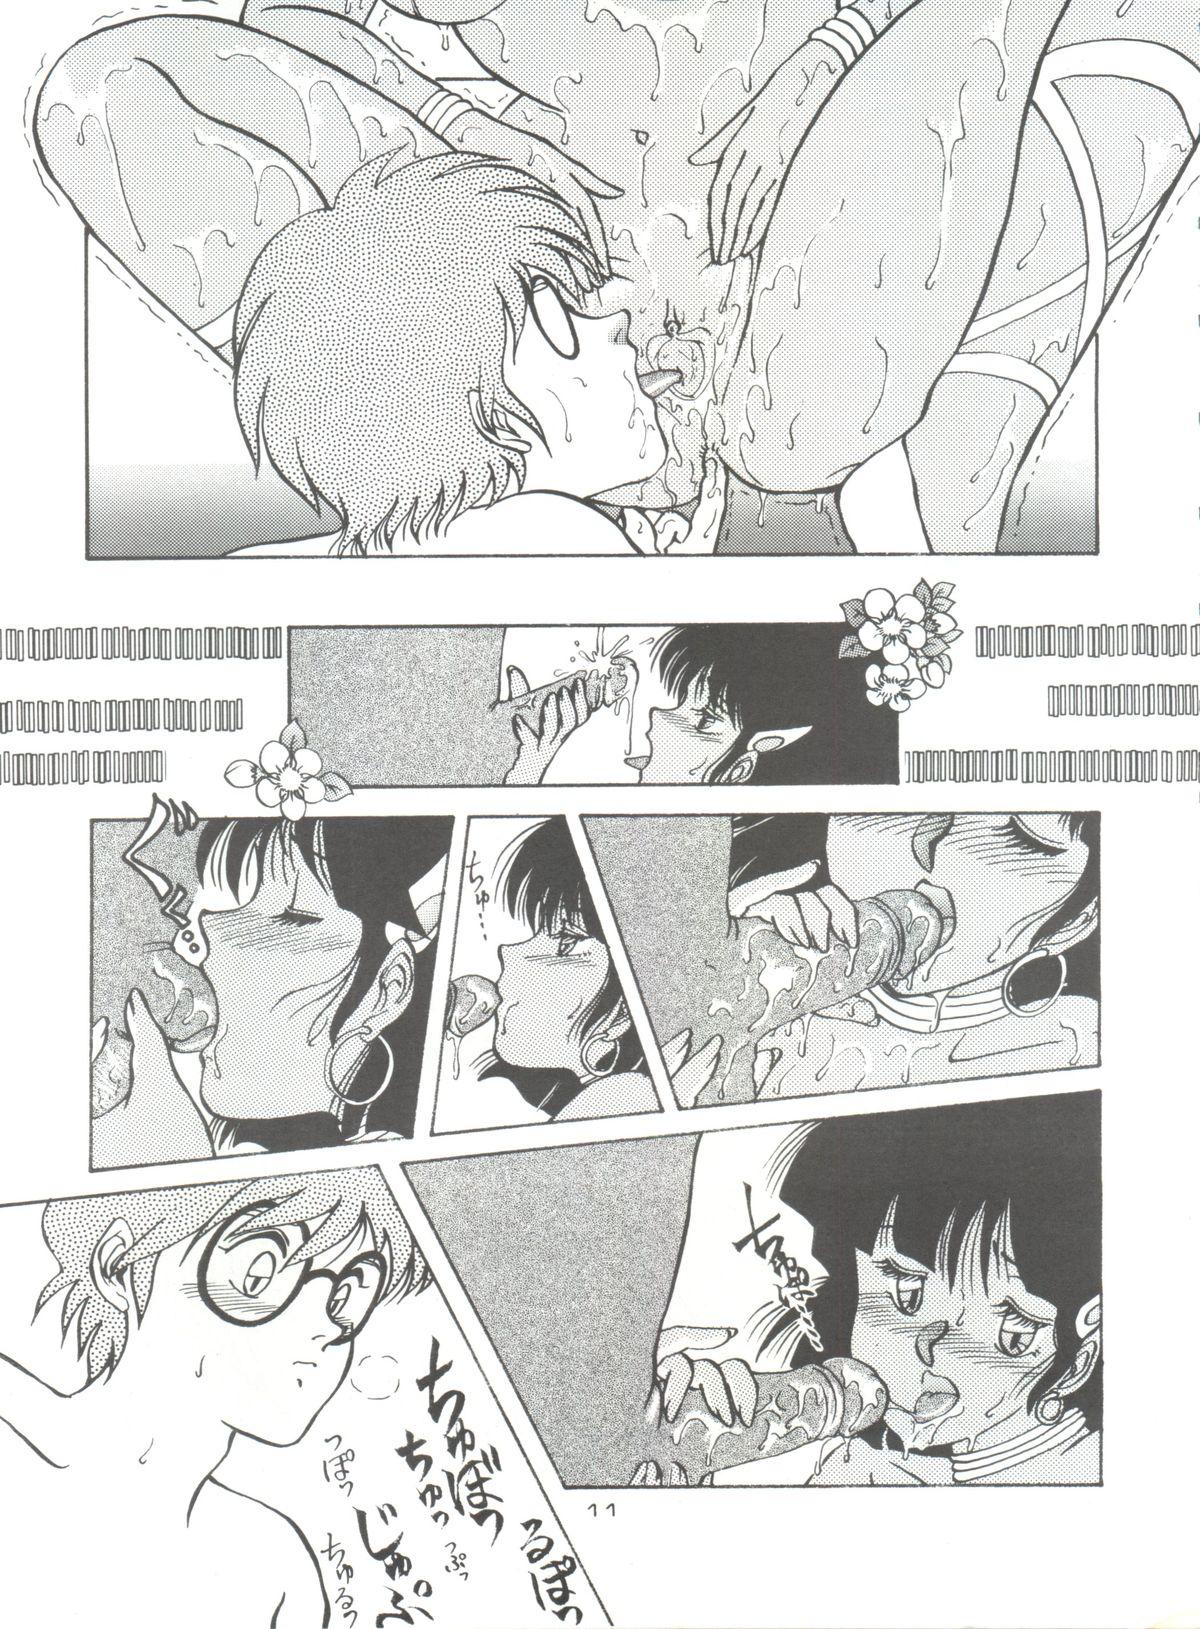 Fit Nadia Girls in Emerald Sea vol. 2 - Minies Club 23 - Fushigi no umi no nadia Old Man - Page 11